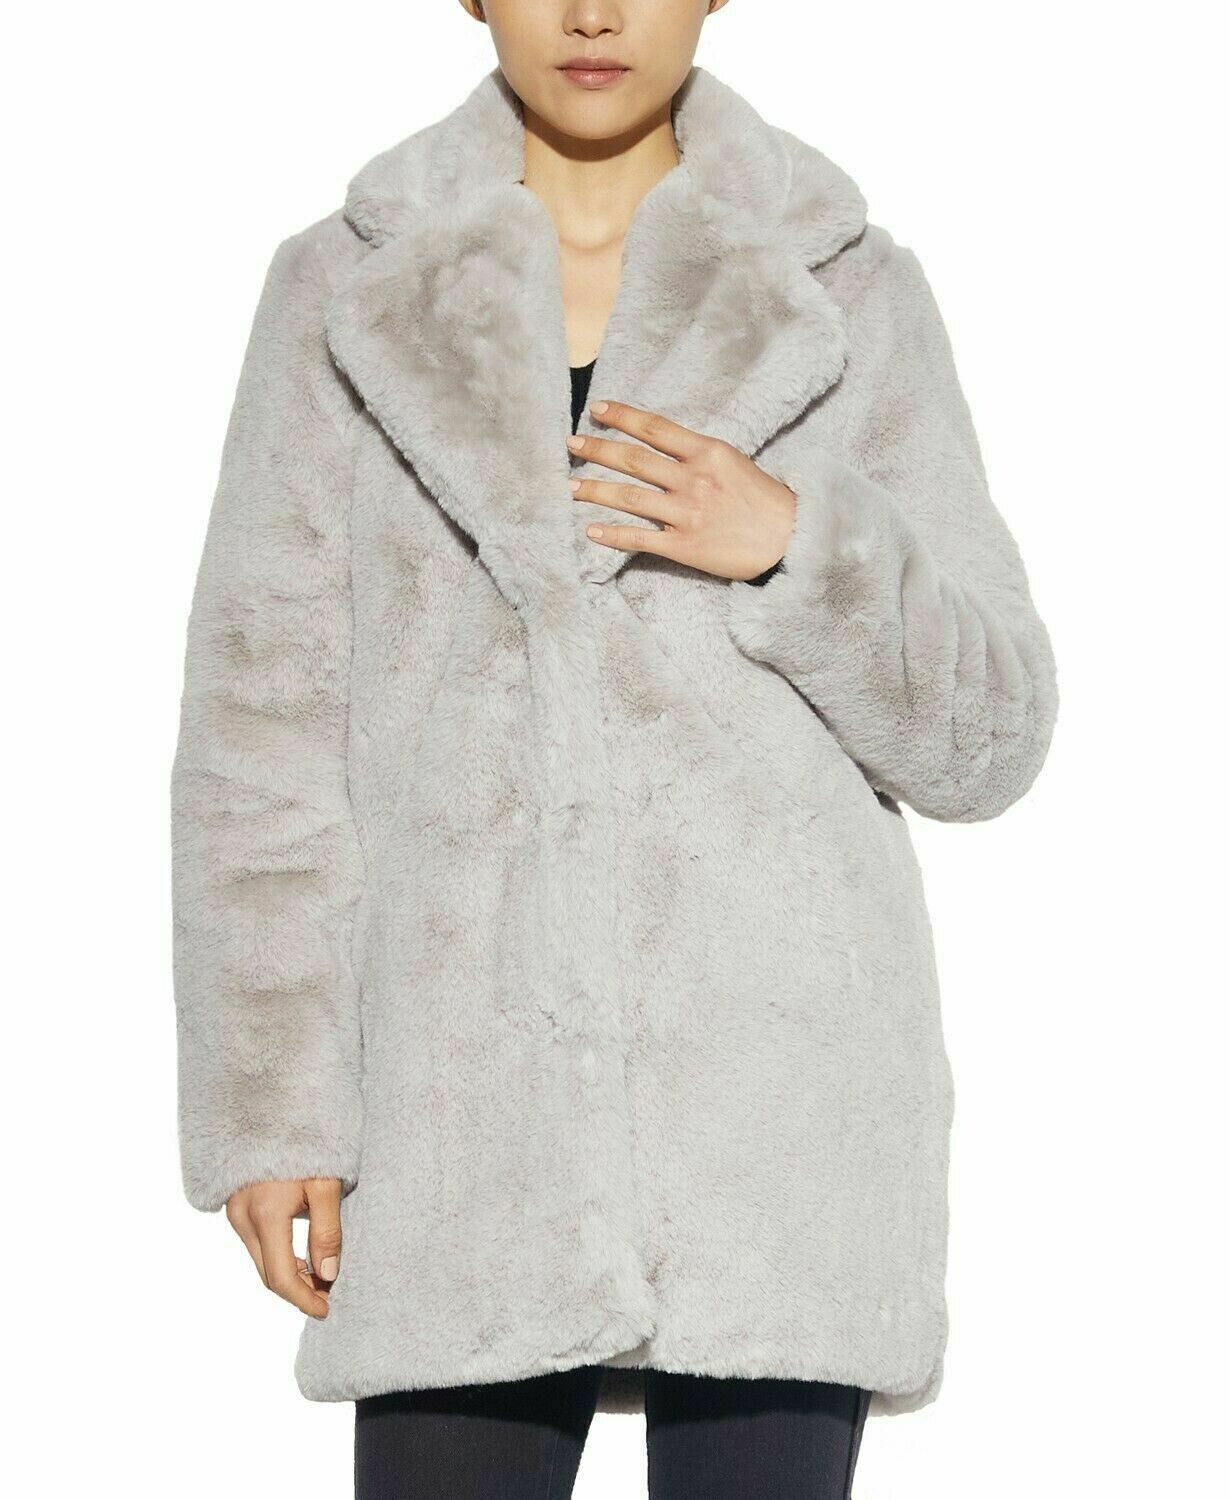 Apparis Eloise Faux Fur Coat, Grey - XL